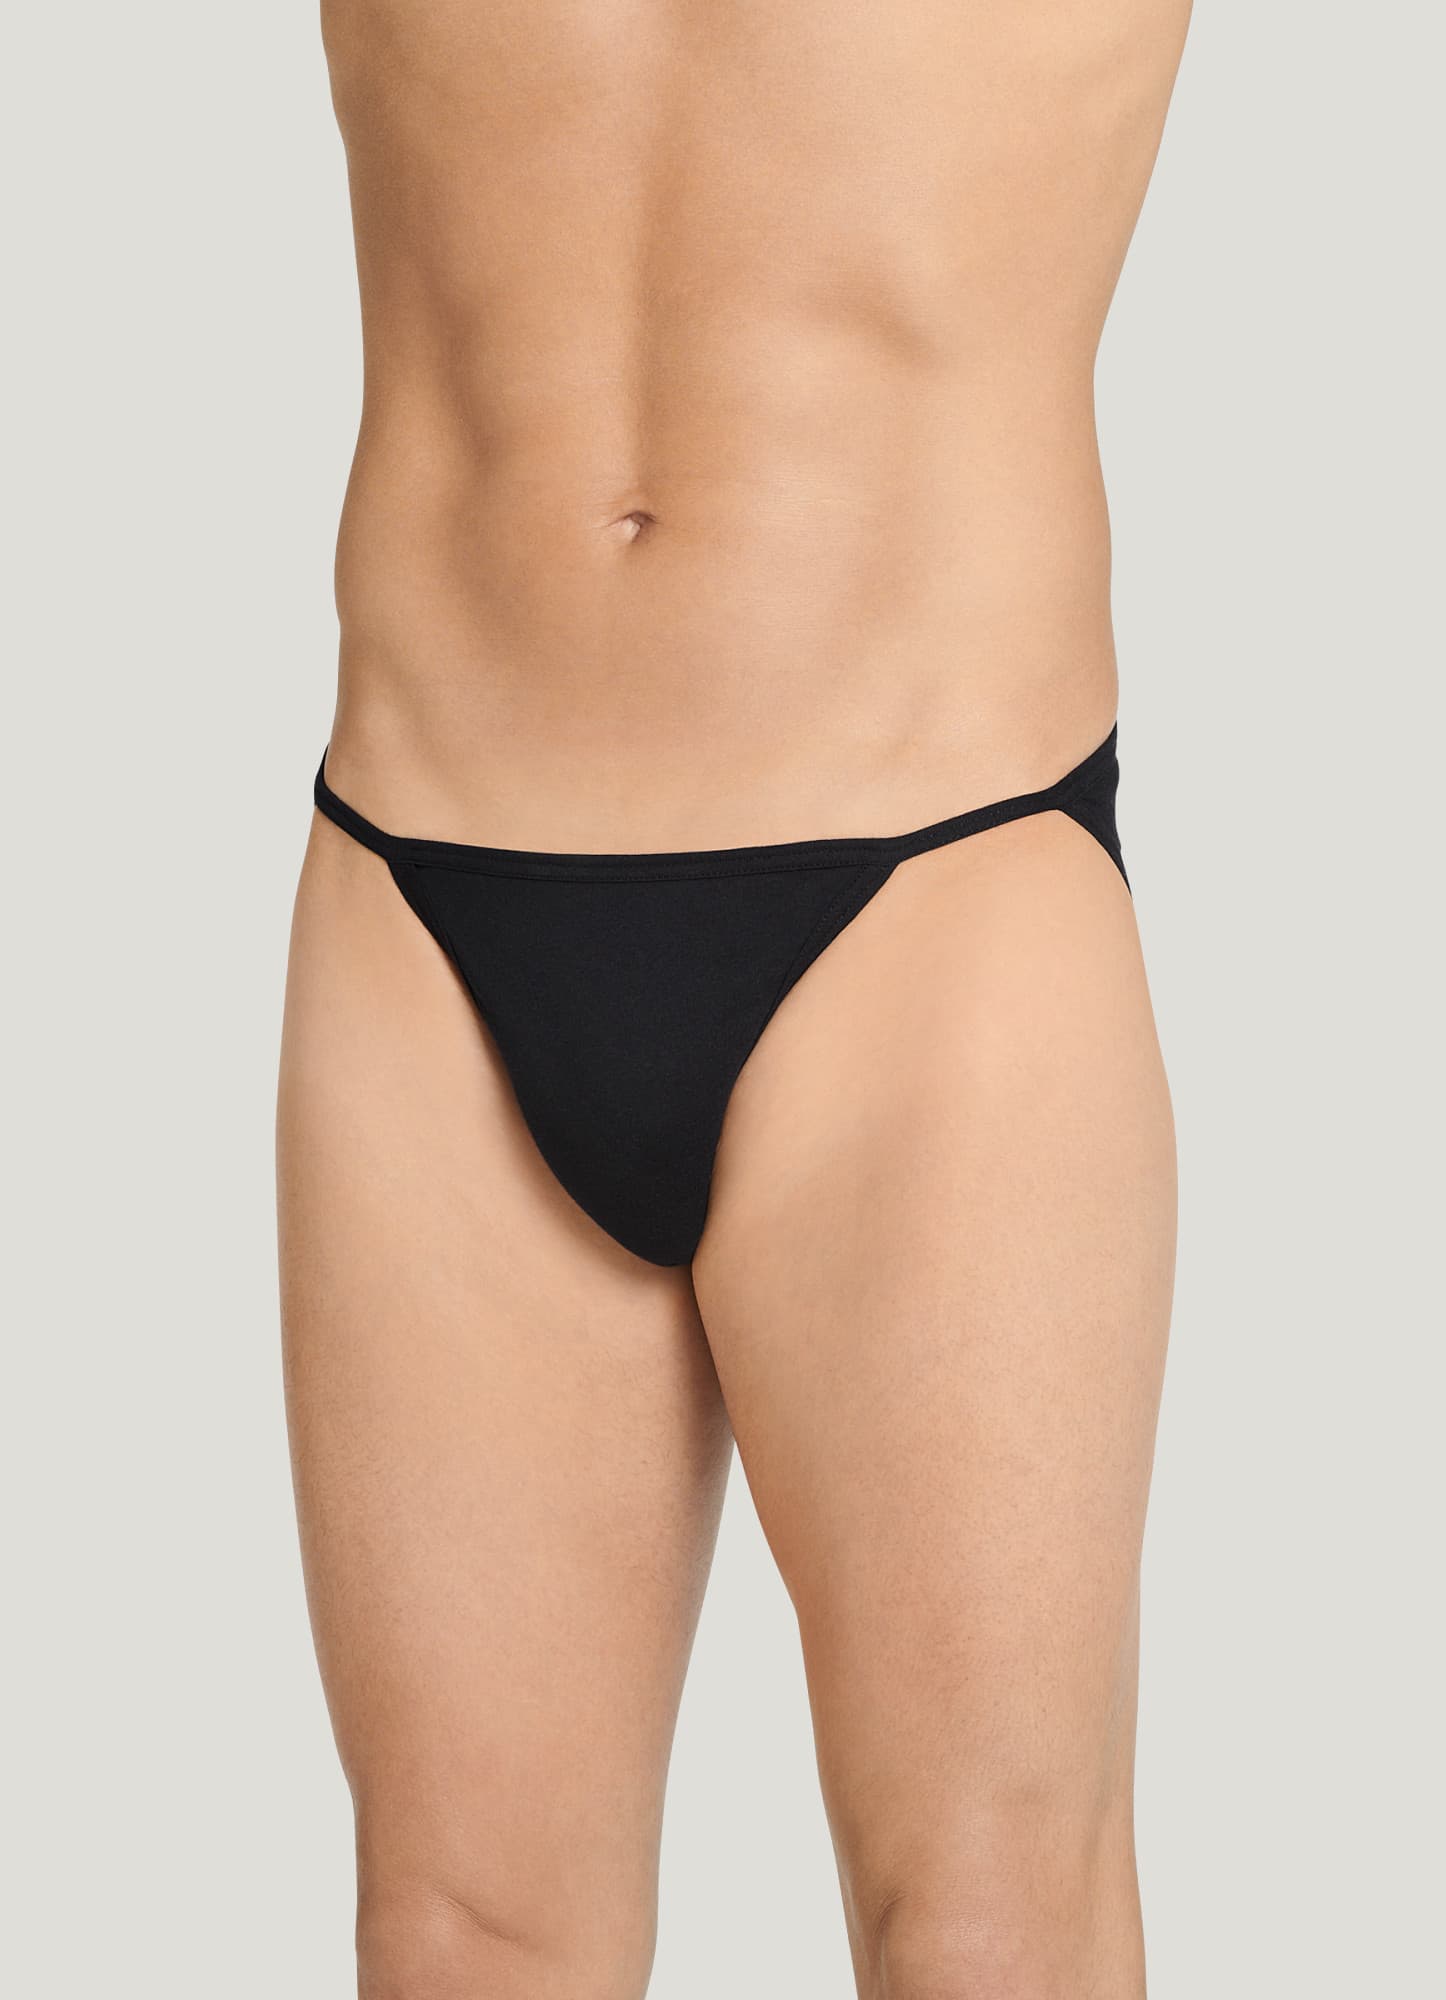 Men's Jockey 3-pack Elance Bikini Briefs Underwear 100% Cotton - Multi  Colors